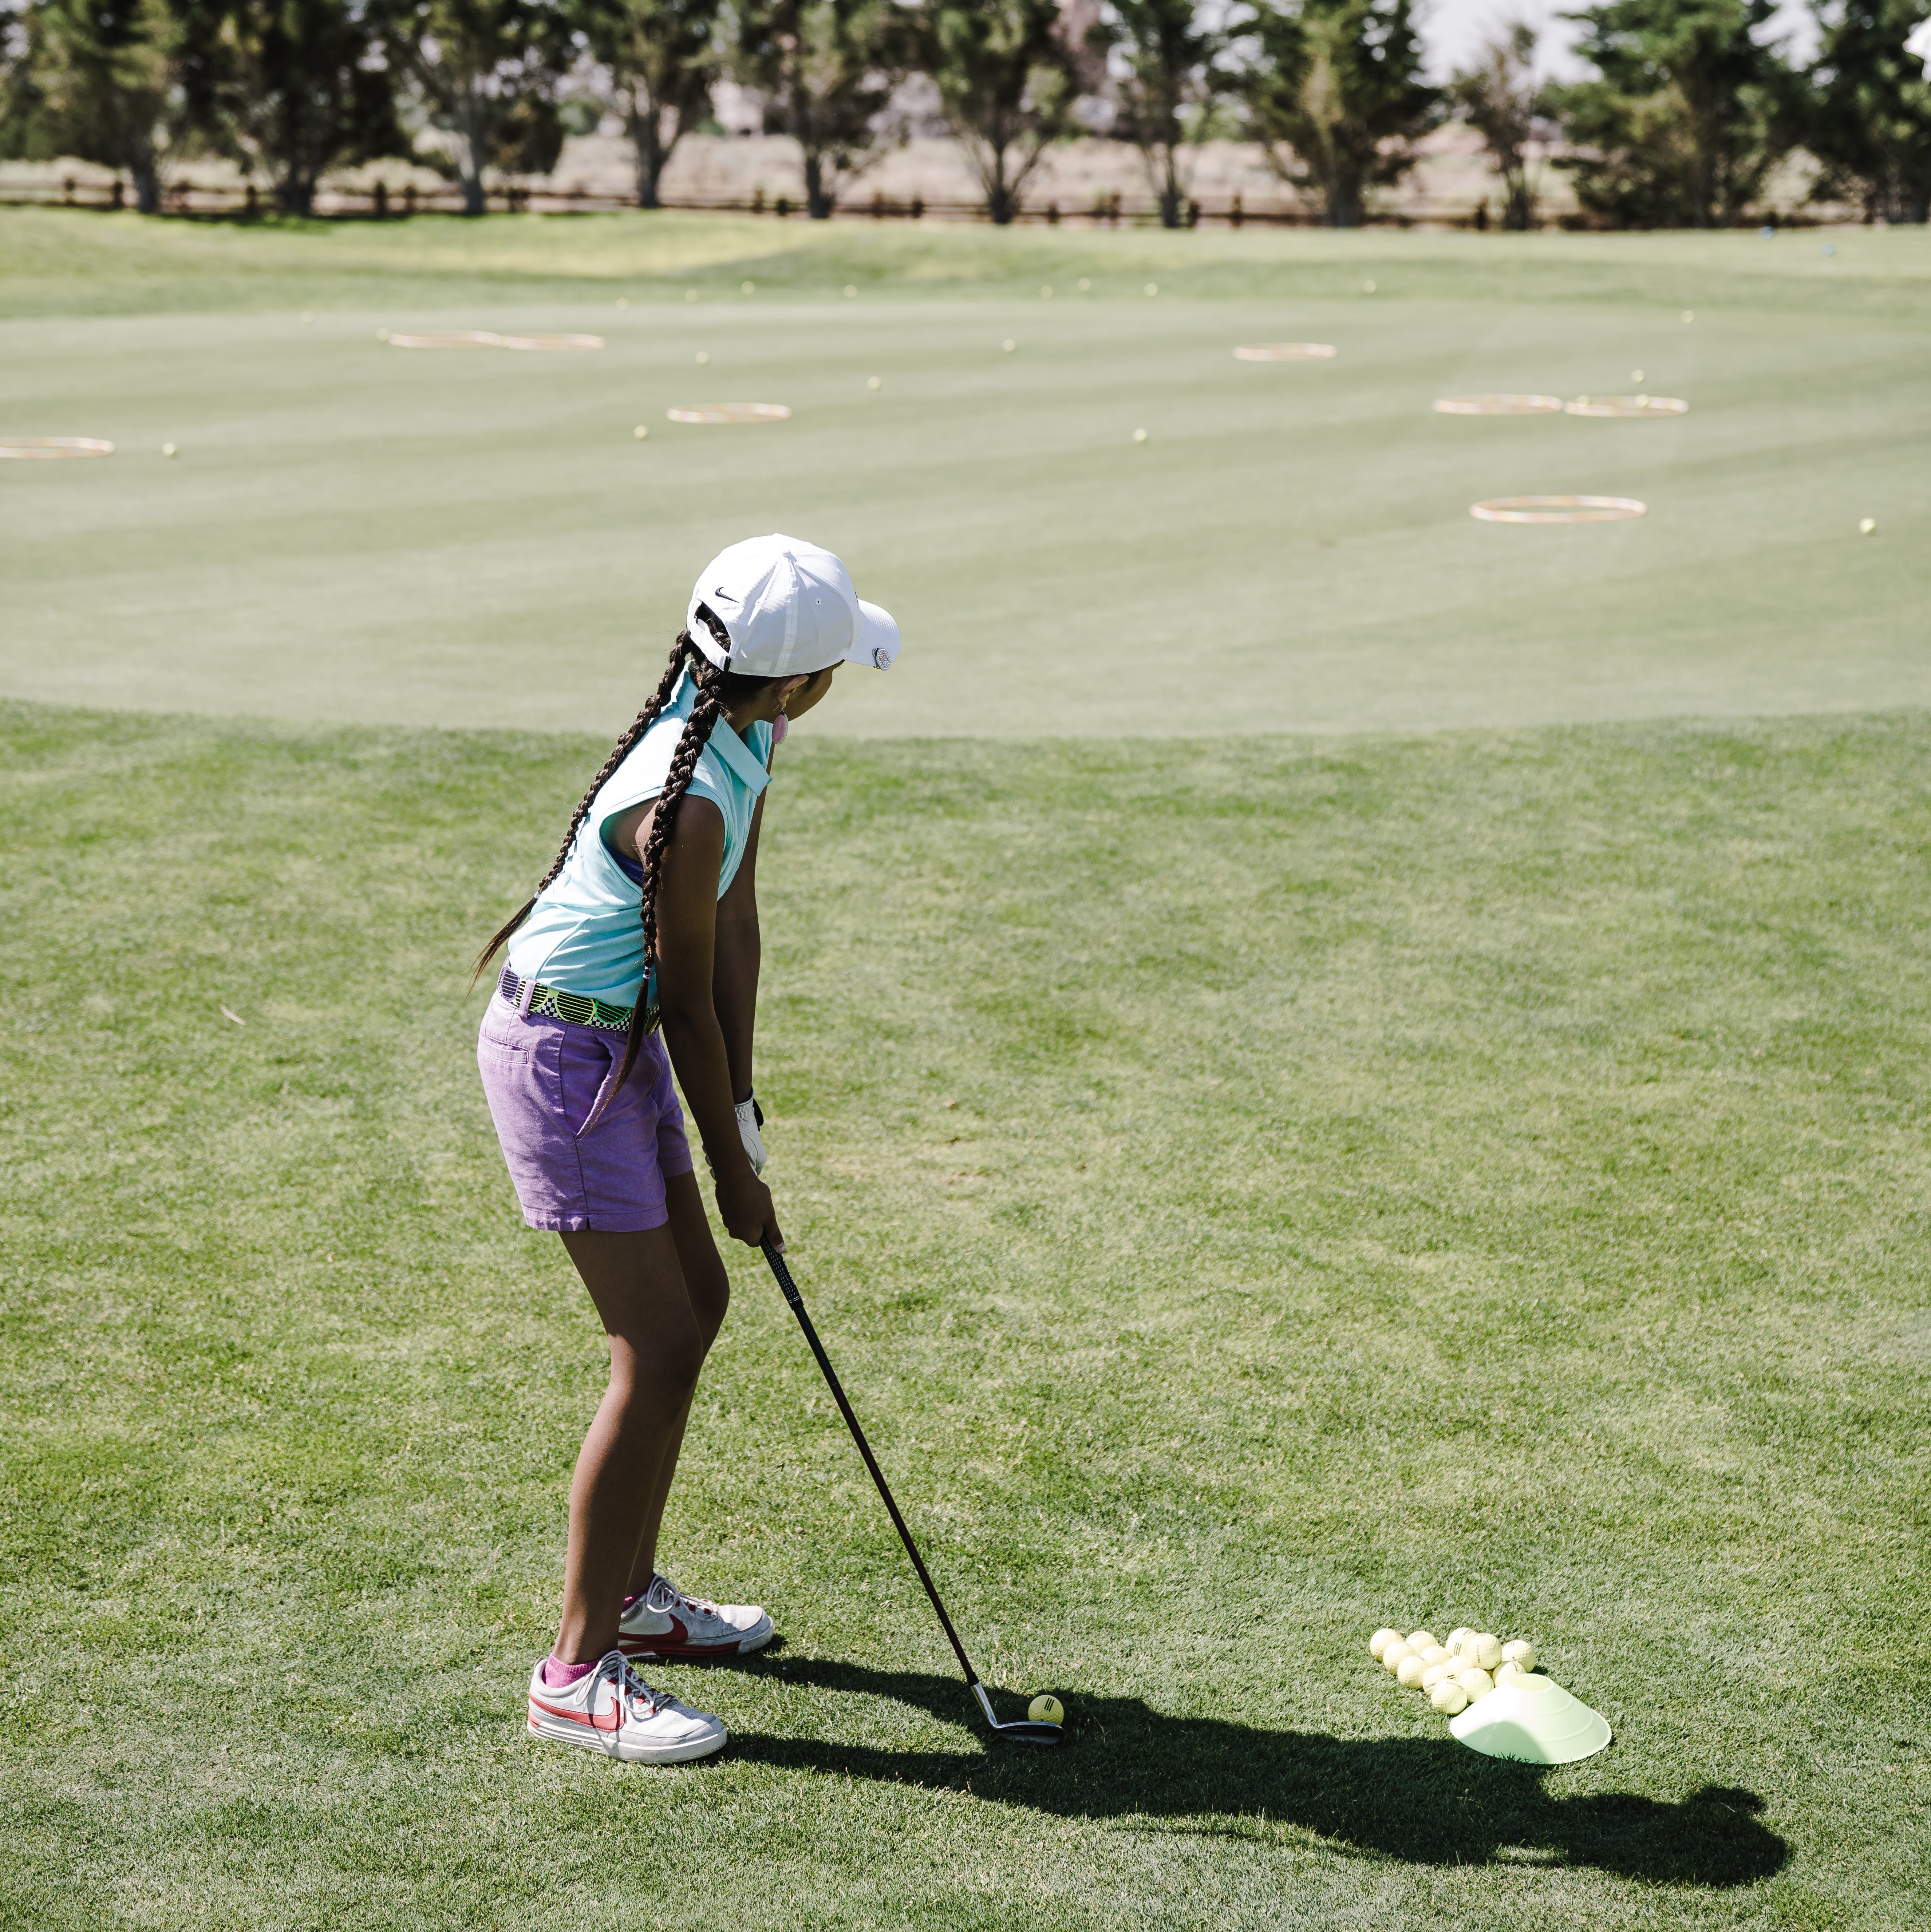 https://www.pexels.com/photo/girl-playing-golf-1325679/